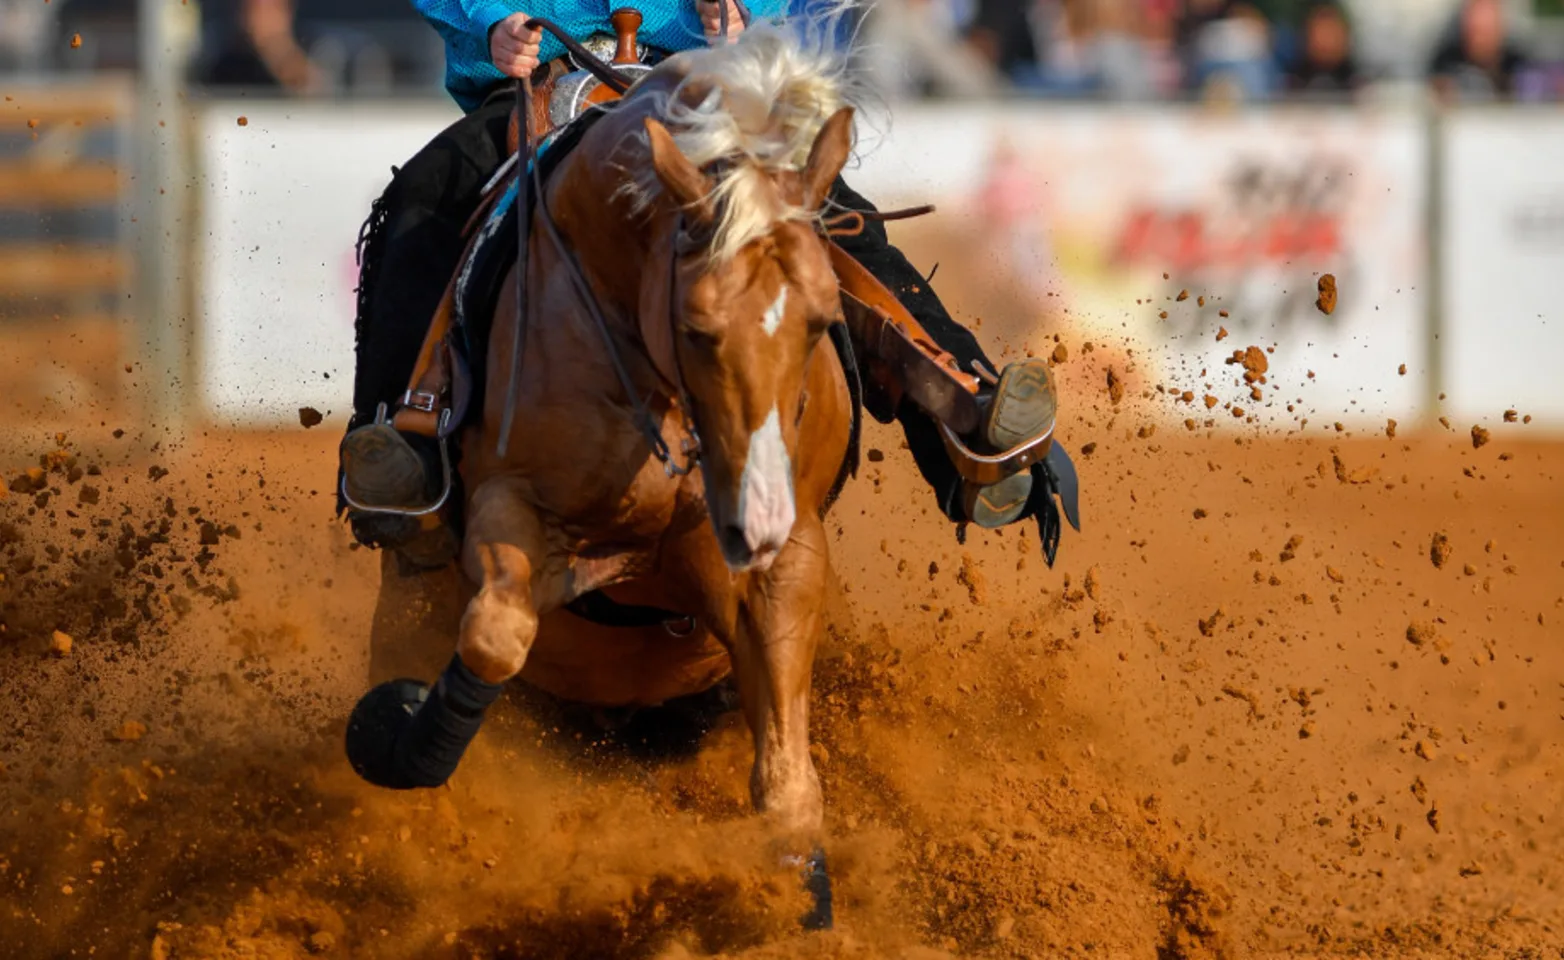 Horse and rider running through dirt